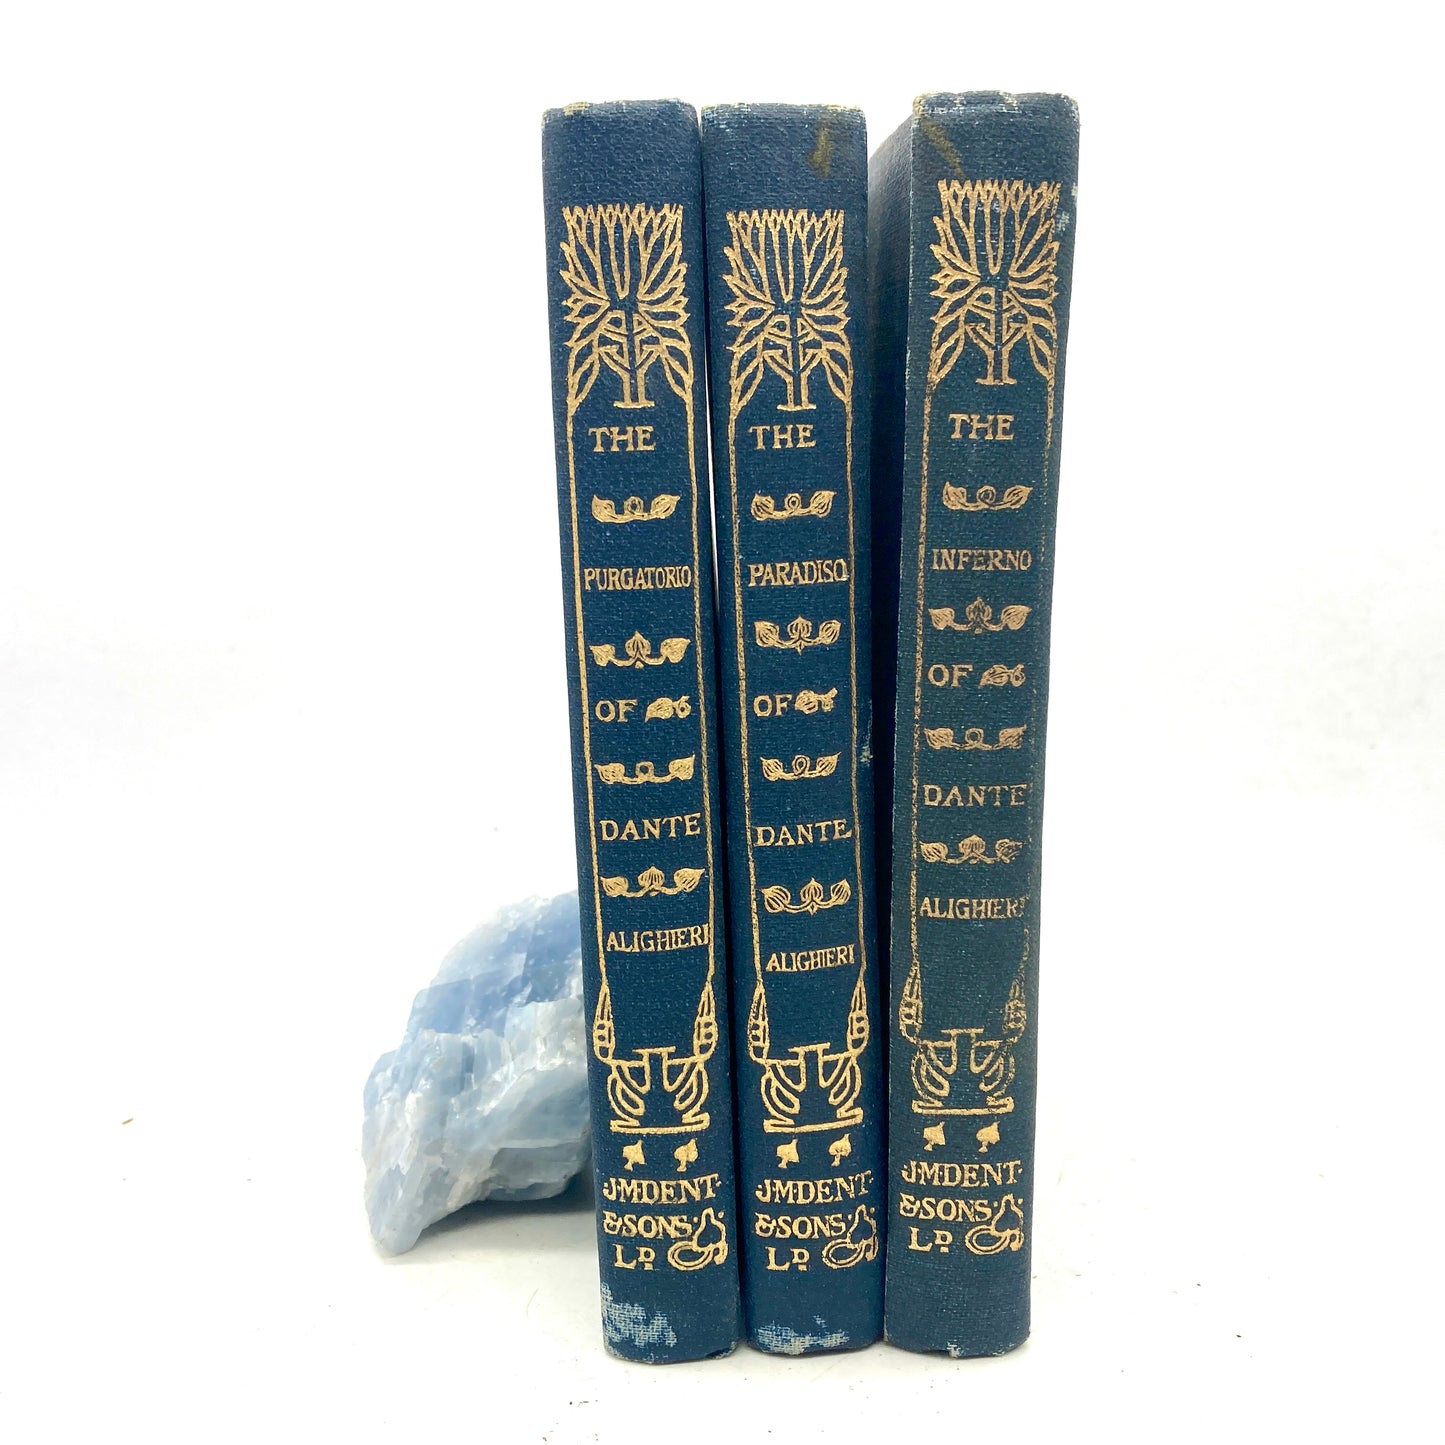 ALIGHIERI, Dante "The Divine Comedy" in 3 Volumes [J.M. Dent, 1941-46]